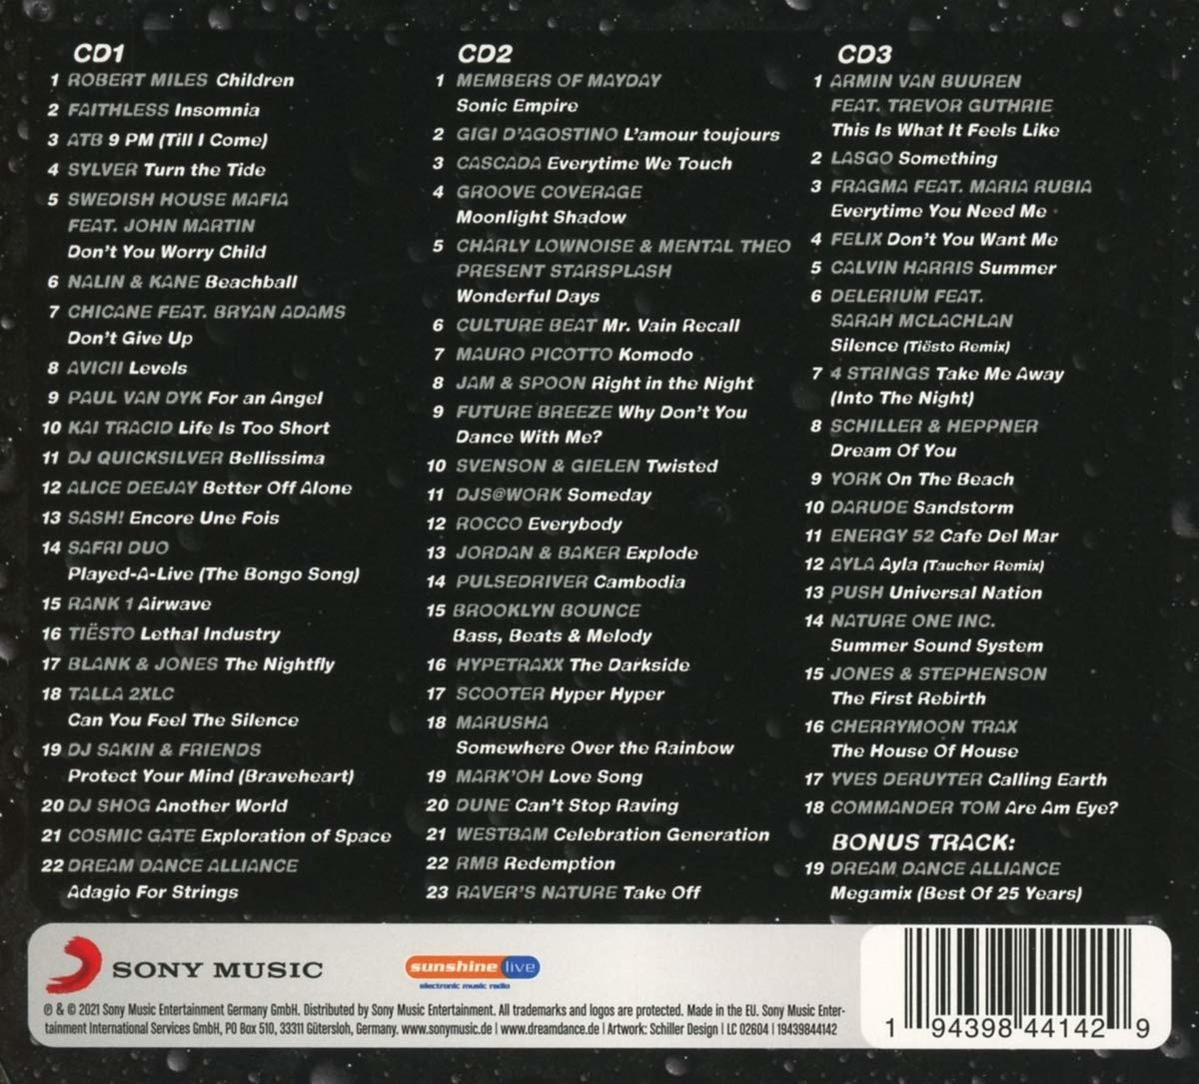 Dance-Best Years 25 Of - - VARIOUS (CD) Dream